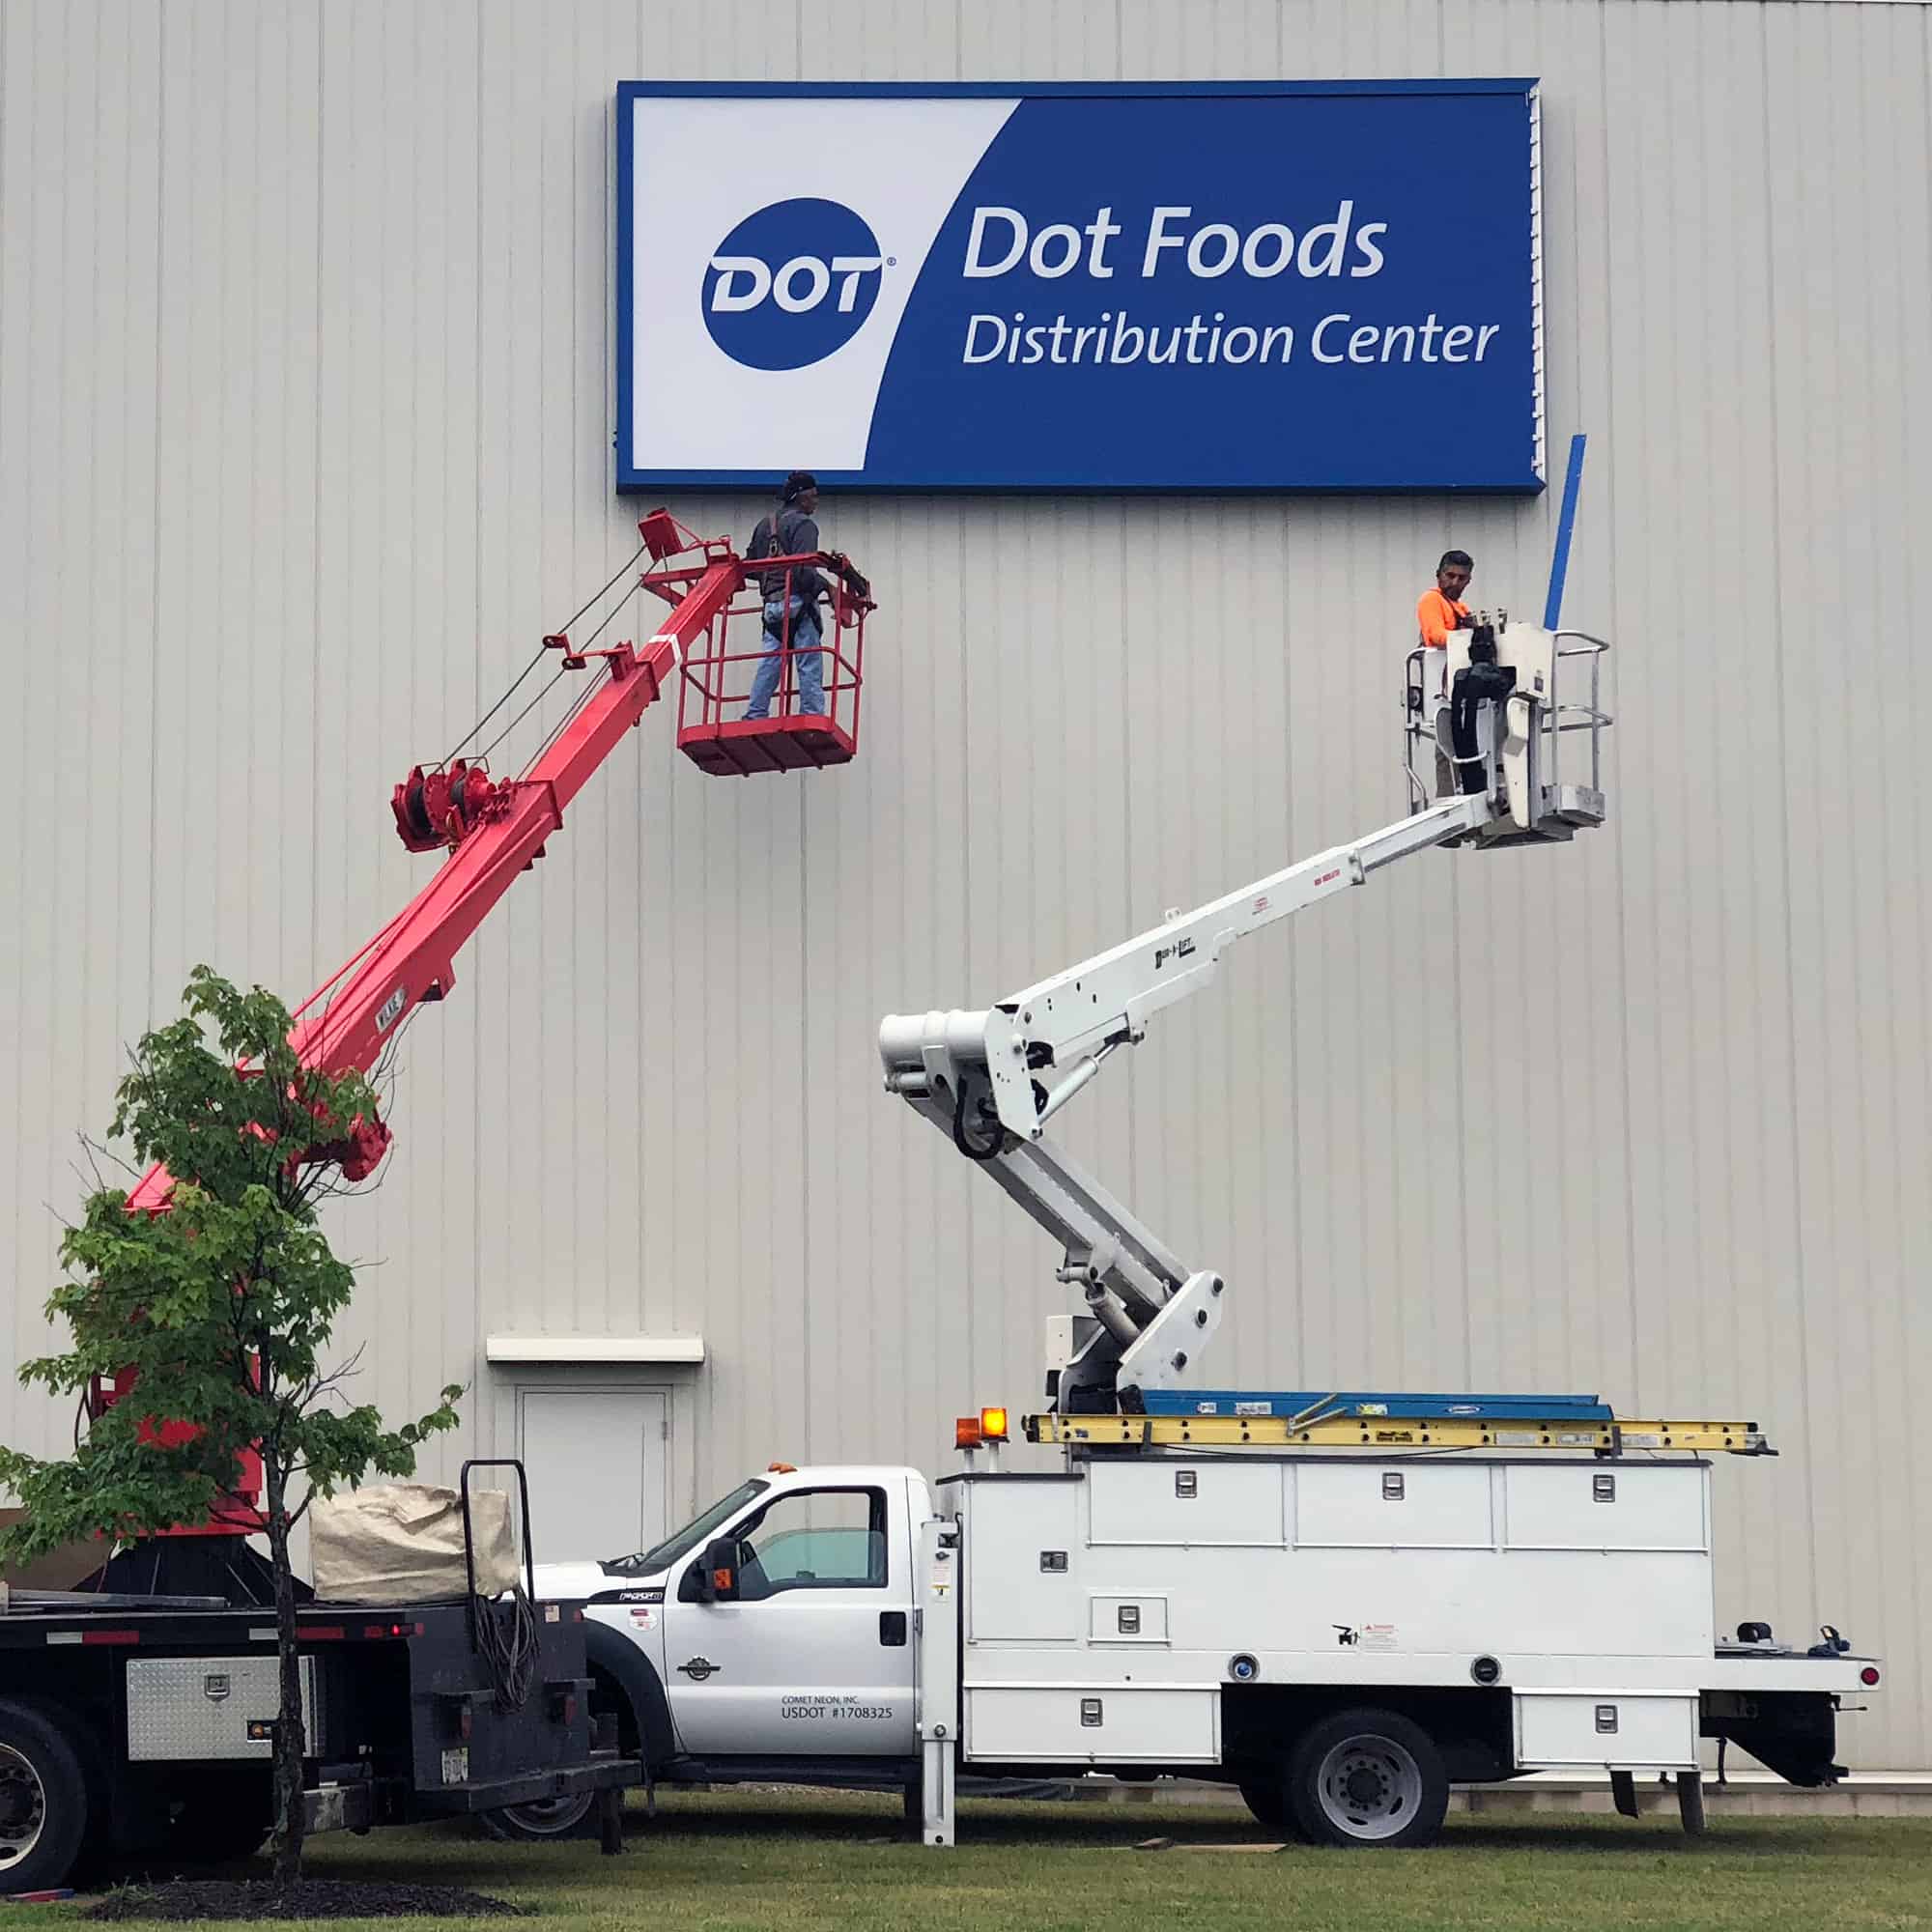 Installation of Dot foods distribution center in Sacramento, California.